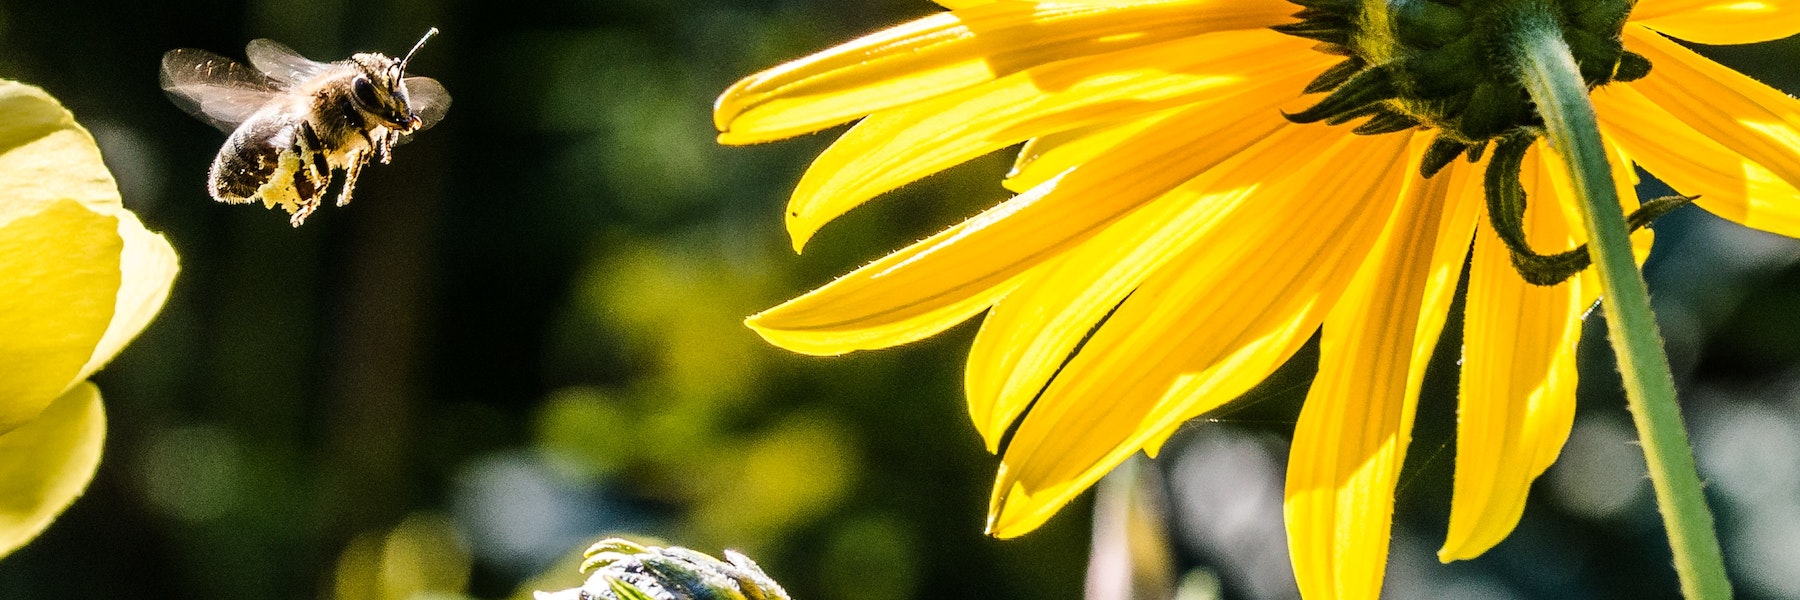 Bee flying near yellow flowers